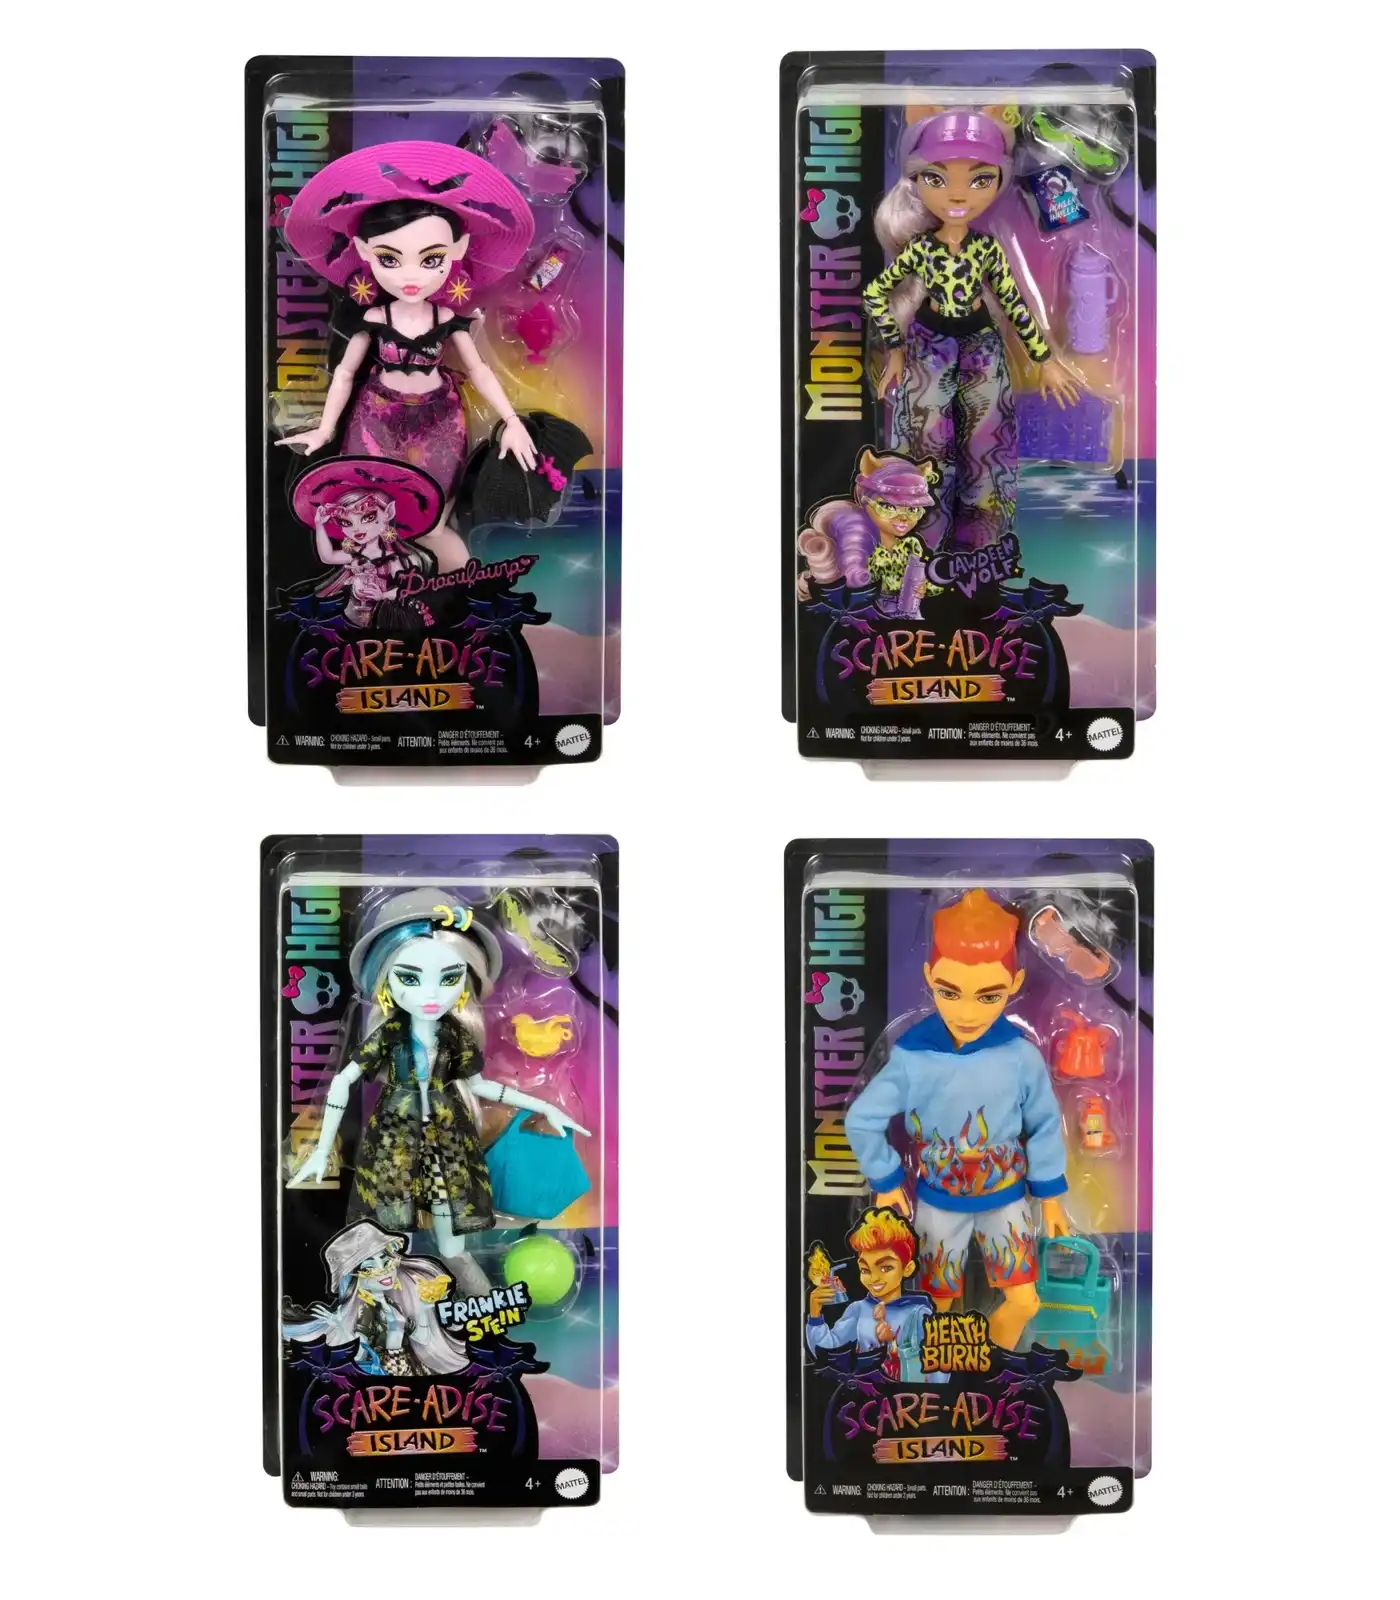 Monster High Scareadise Island Doll. Assorted